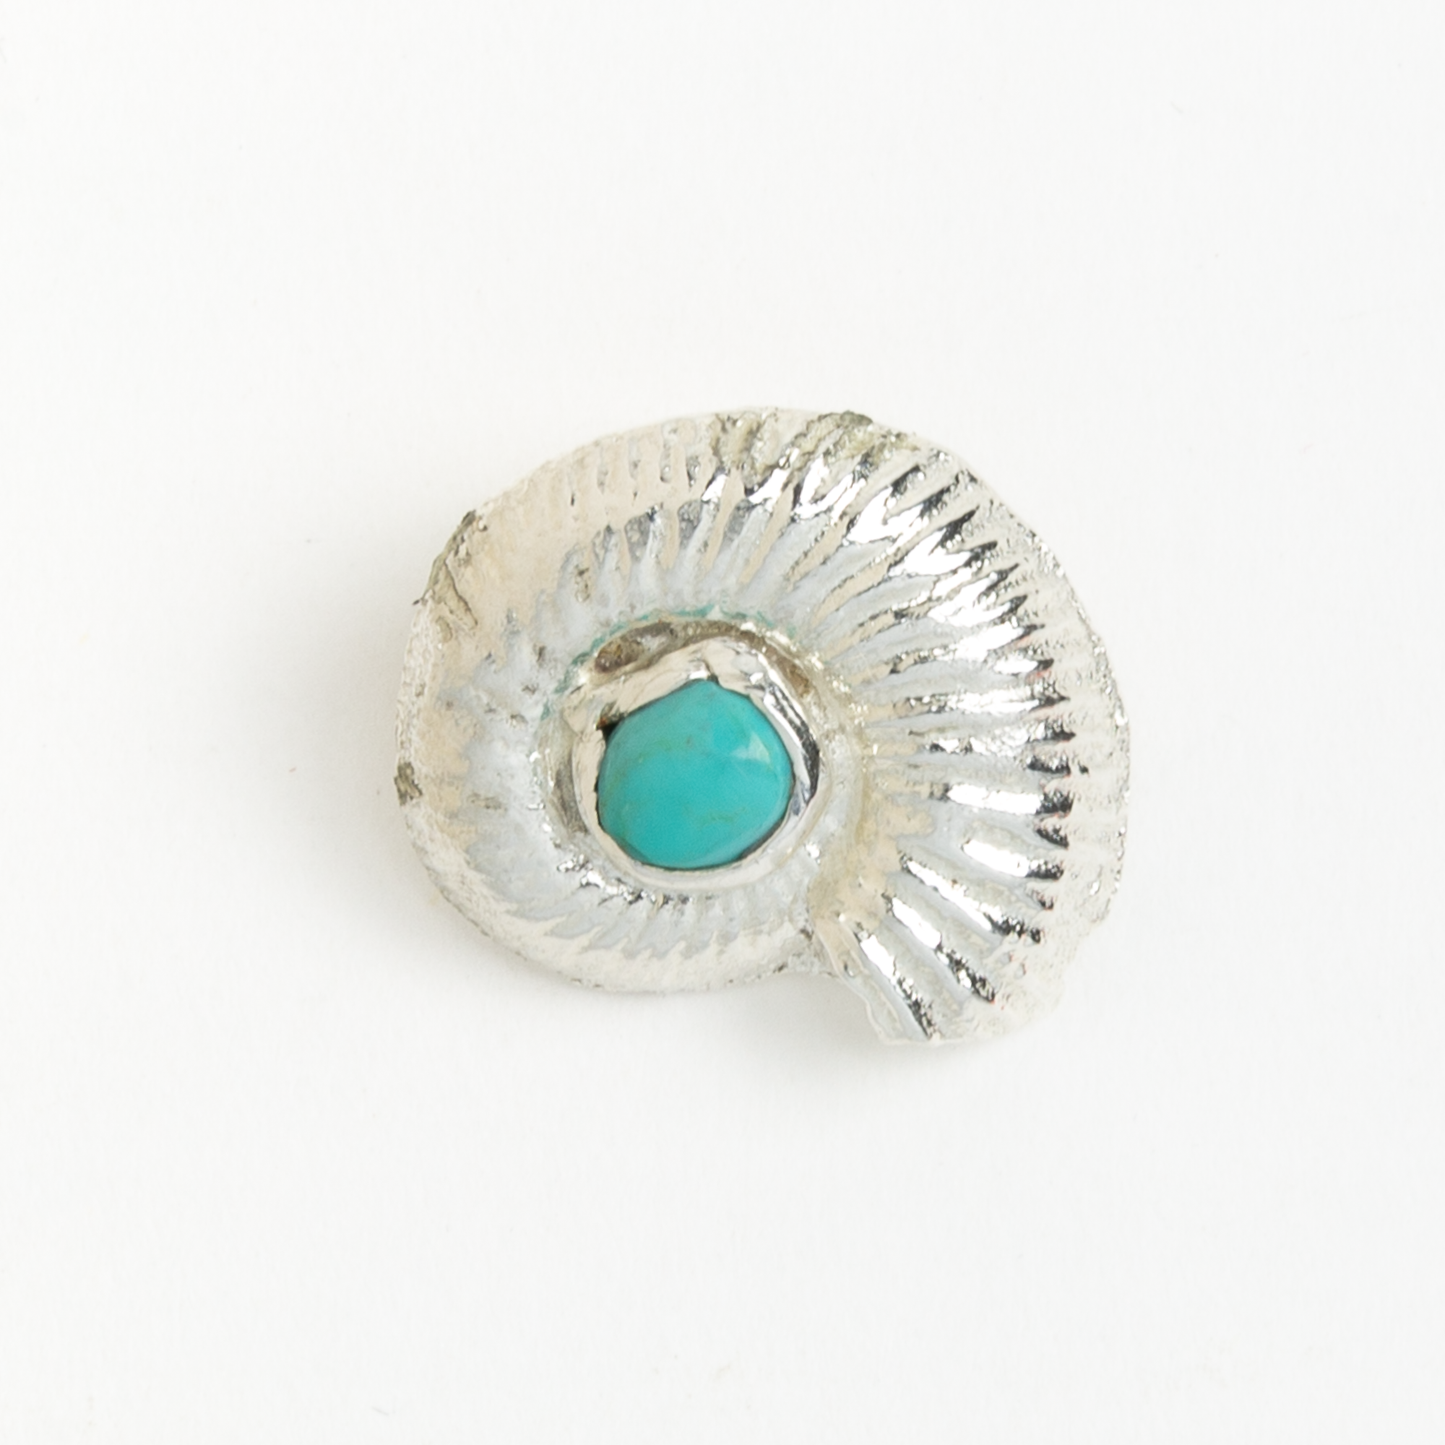 Turquoise Ammonite Hat Bolo